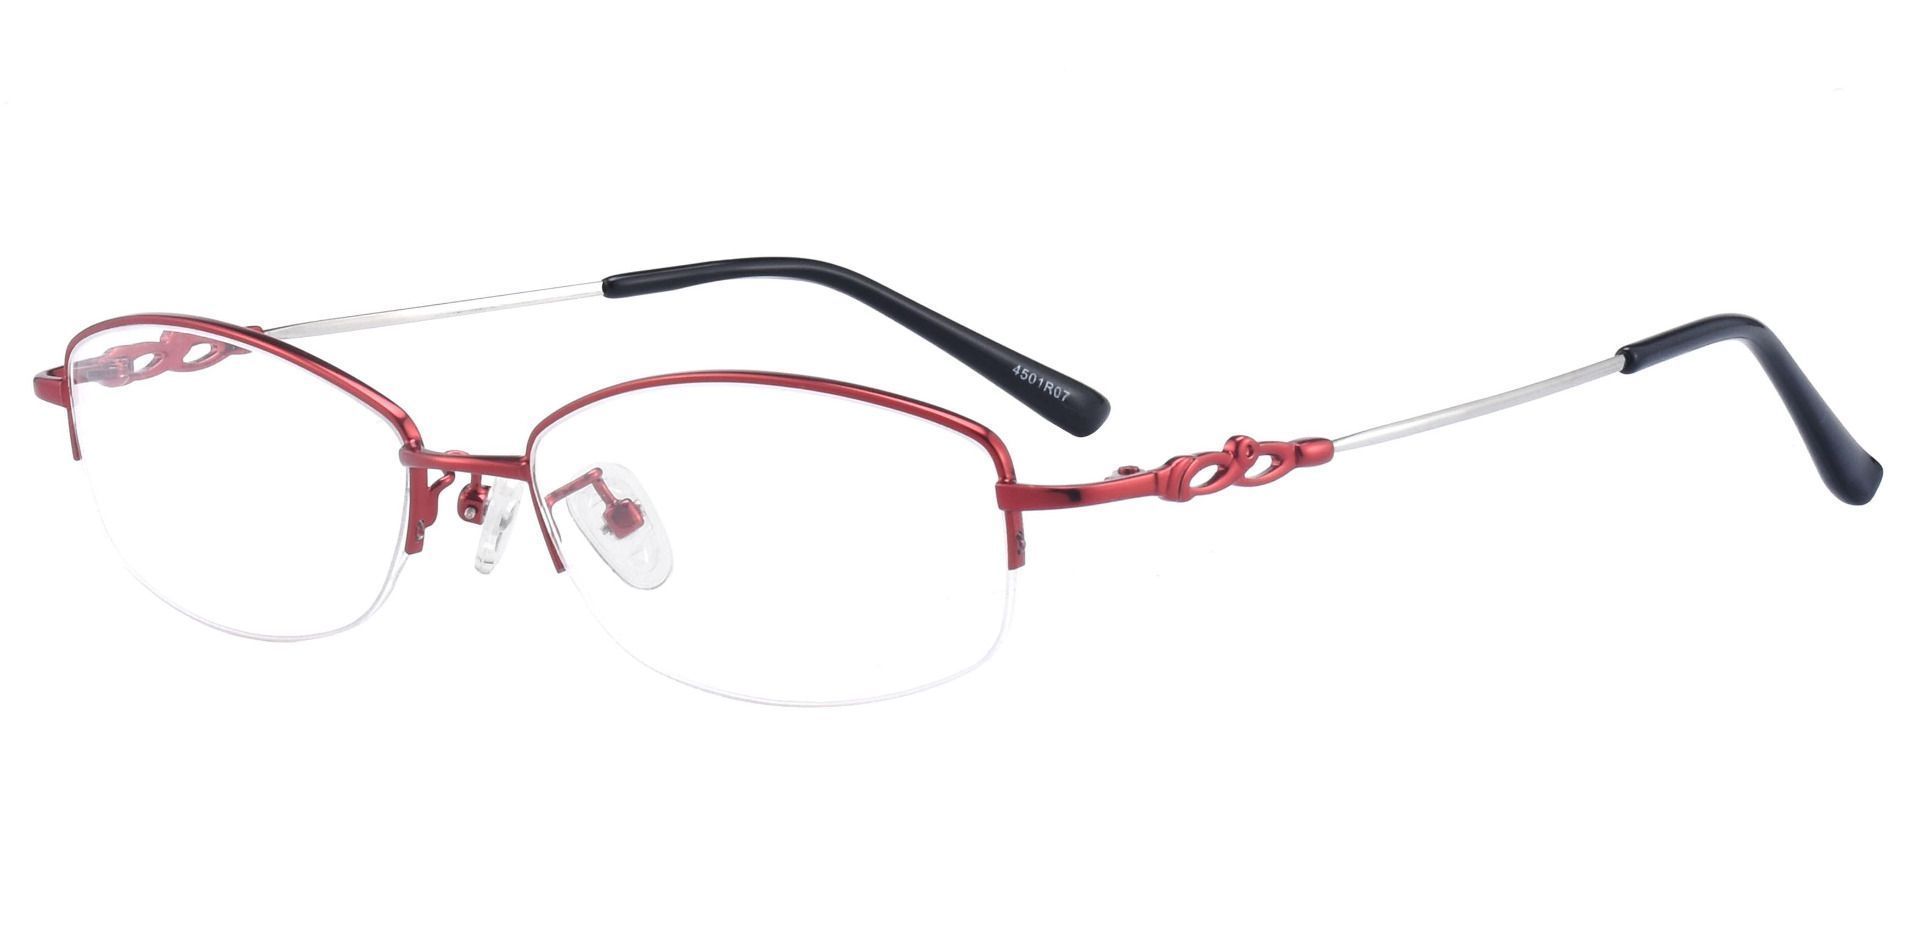 Meadowsweet Oval Prescription Glasses - Red